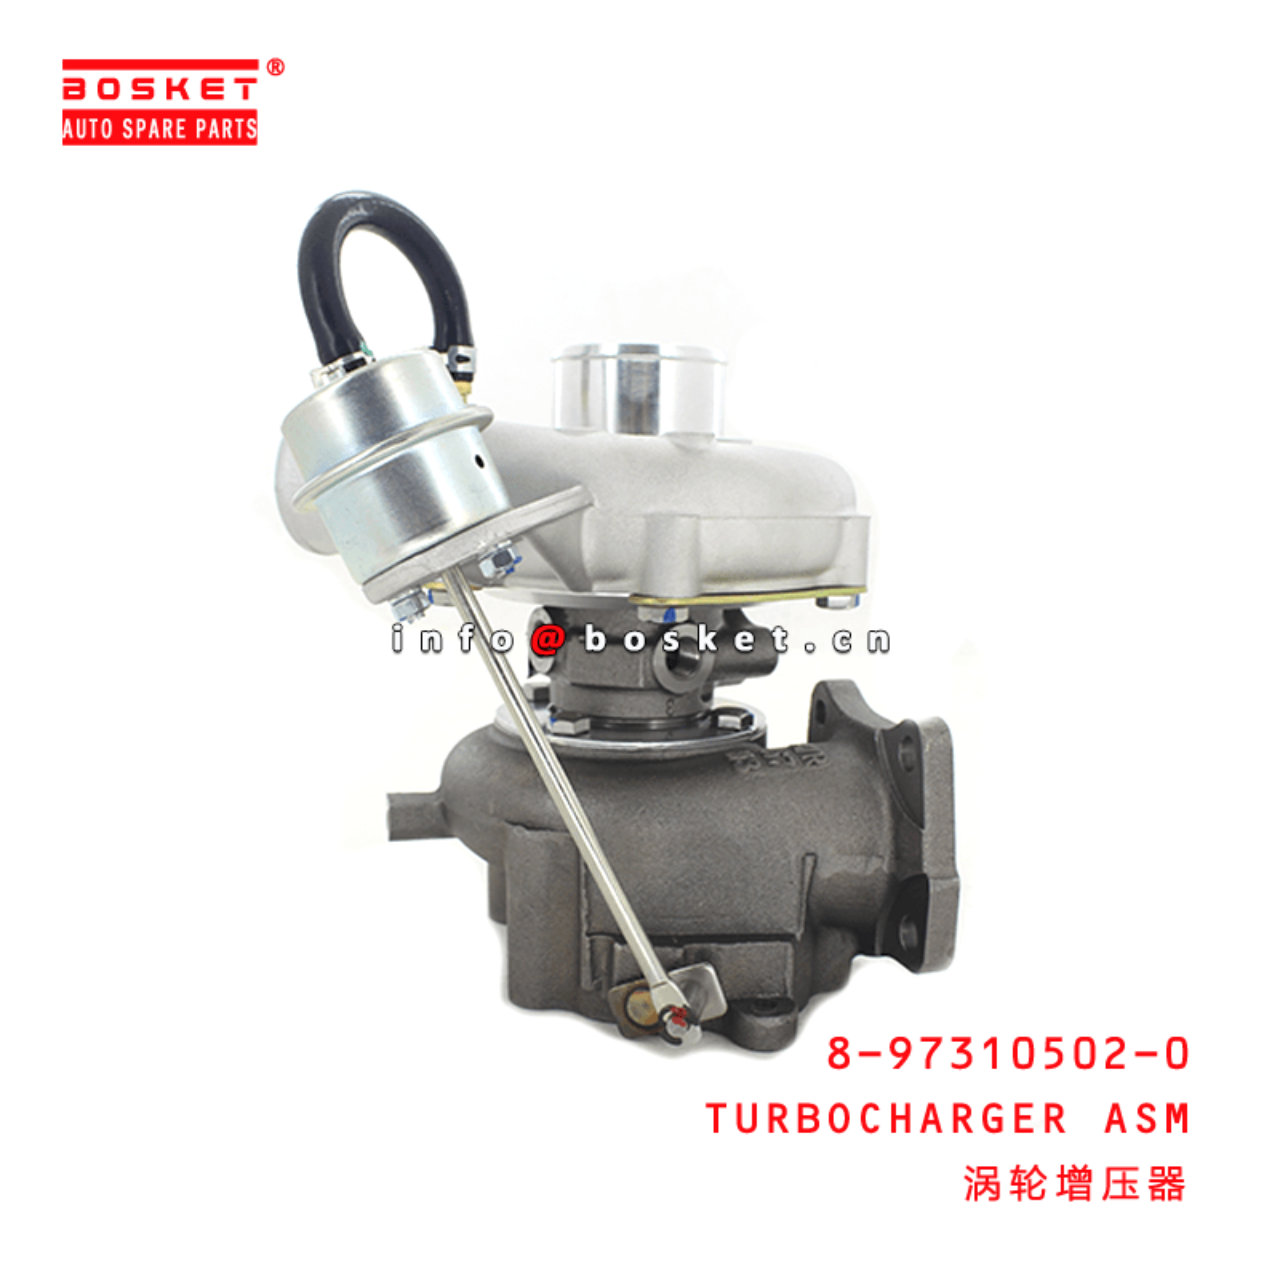  8-97310502-0 Turbocharger Assembly 8973105020 Suitable for ISUZU NPR 4HK1-T